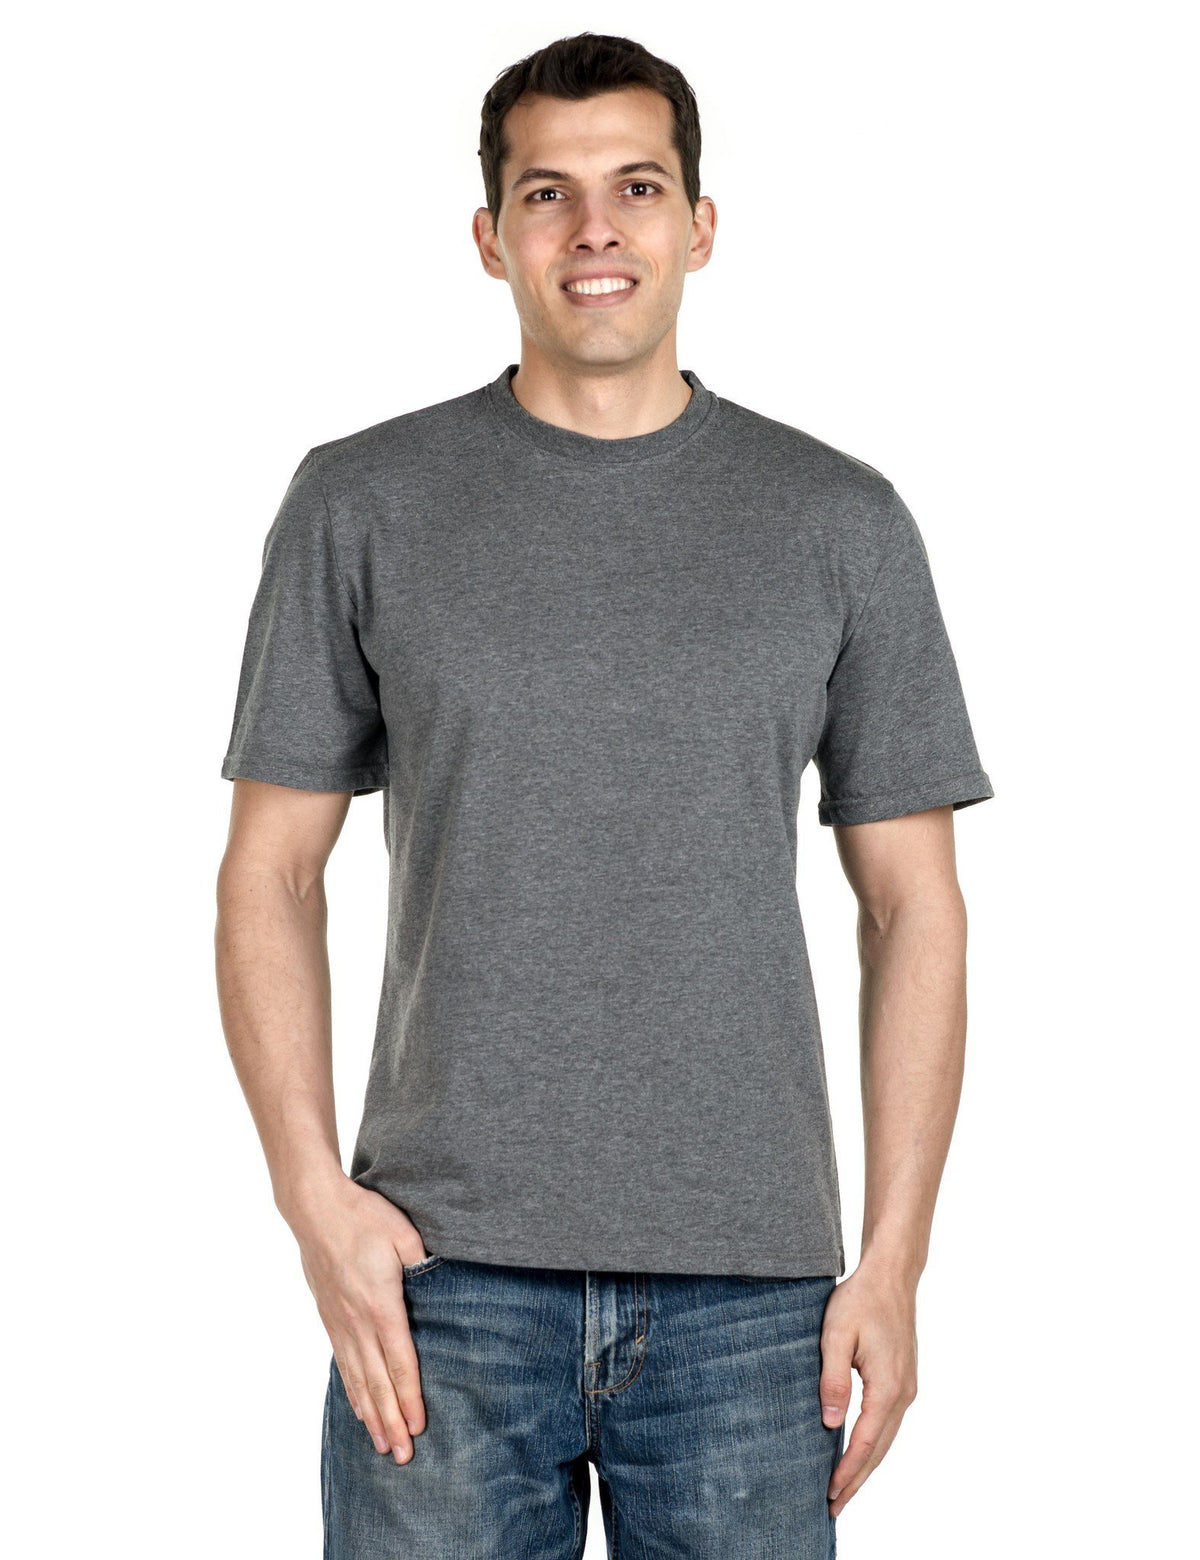 Men's 2-Pack Premium Knit T-Shirts - Black/Charcoal